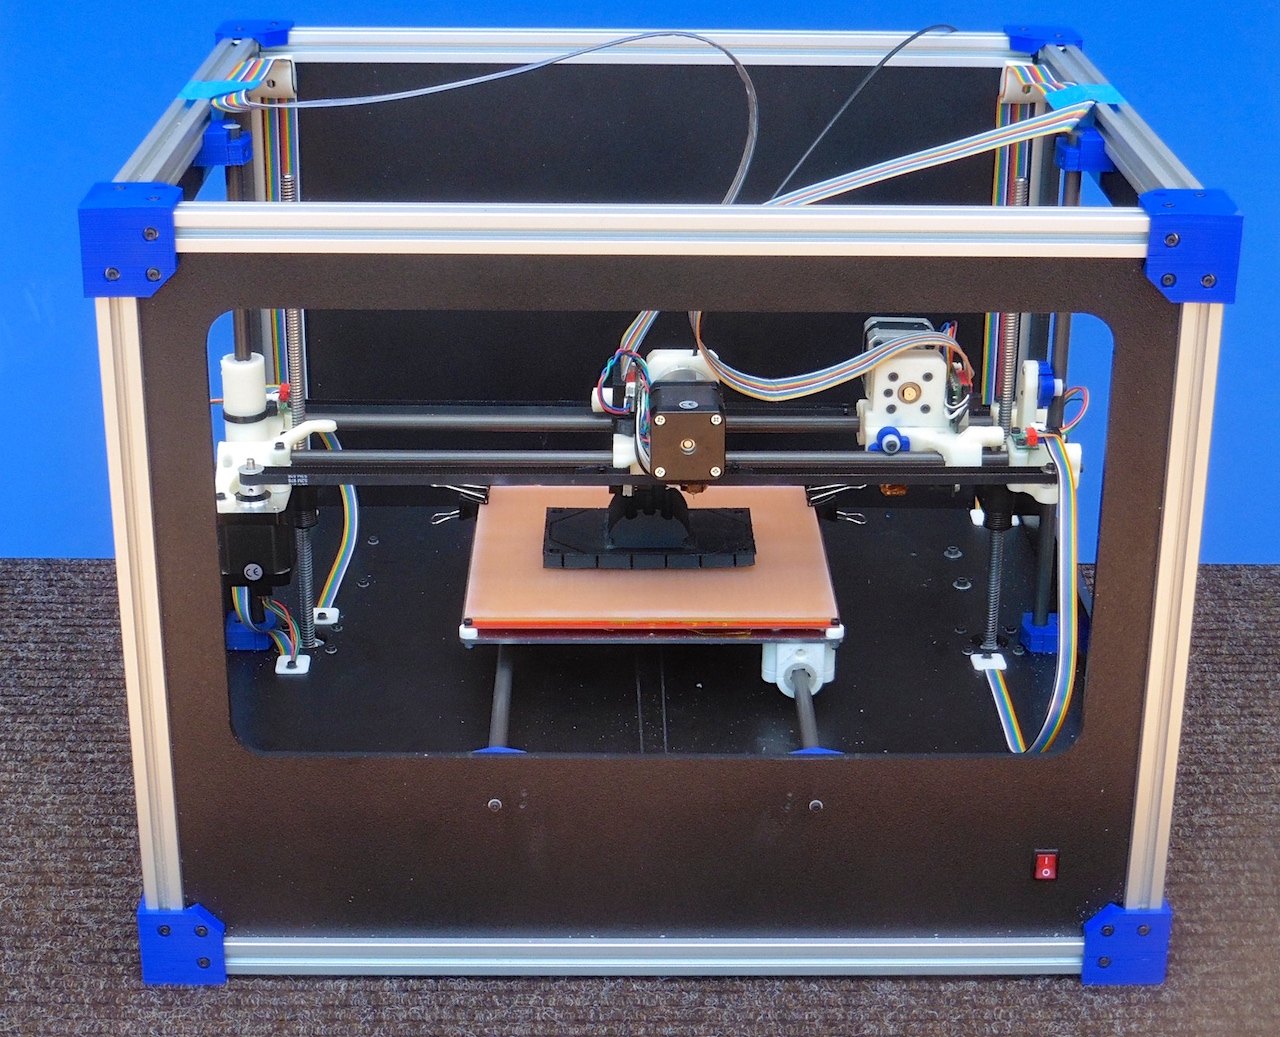  The Fabricatus desktop 3D printer 